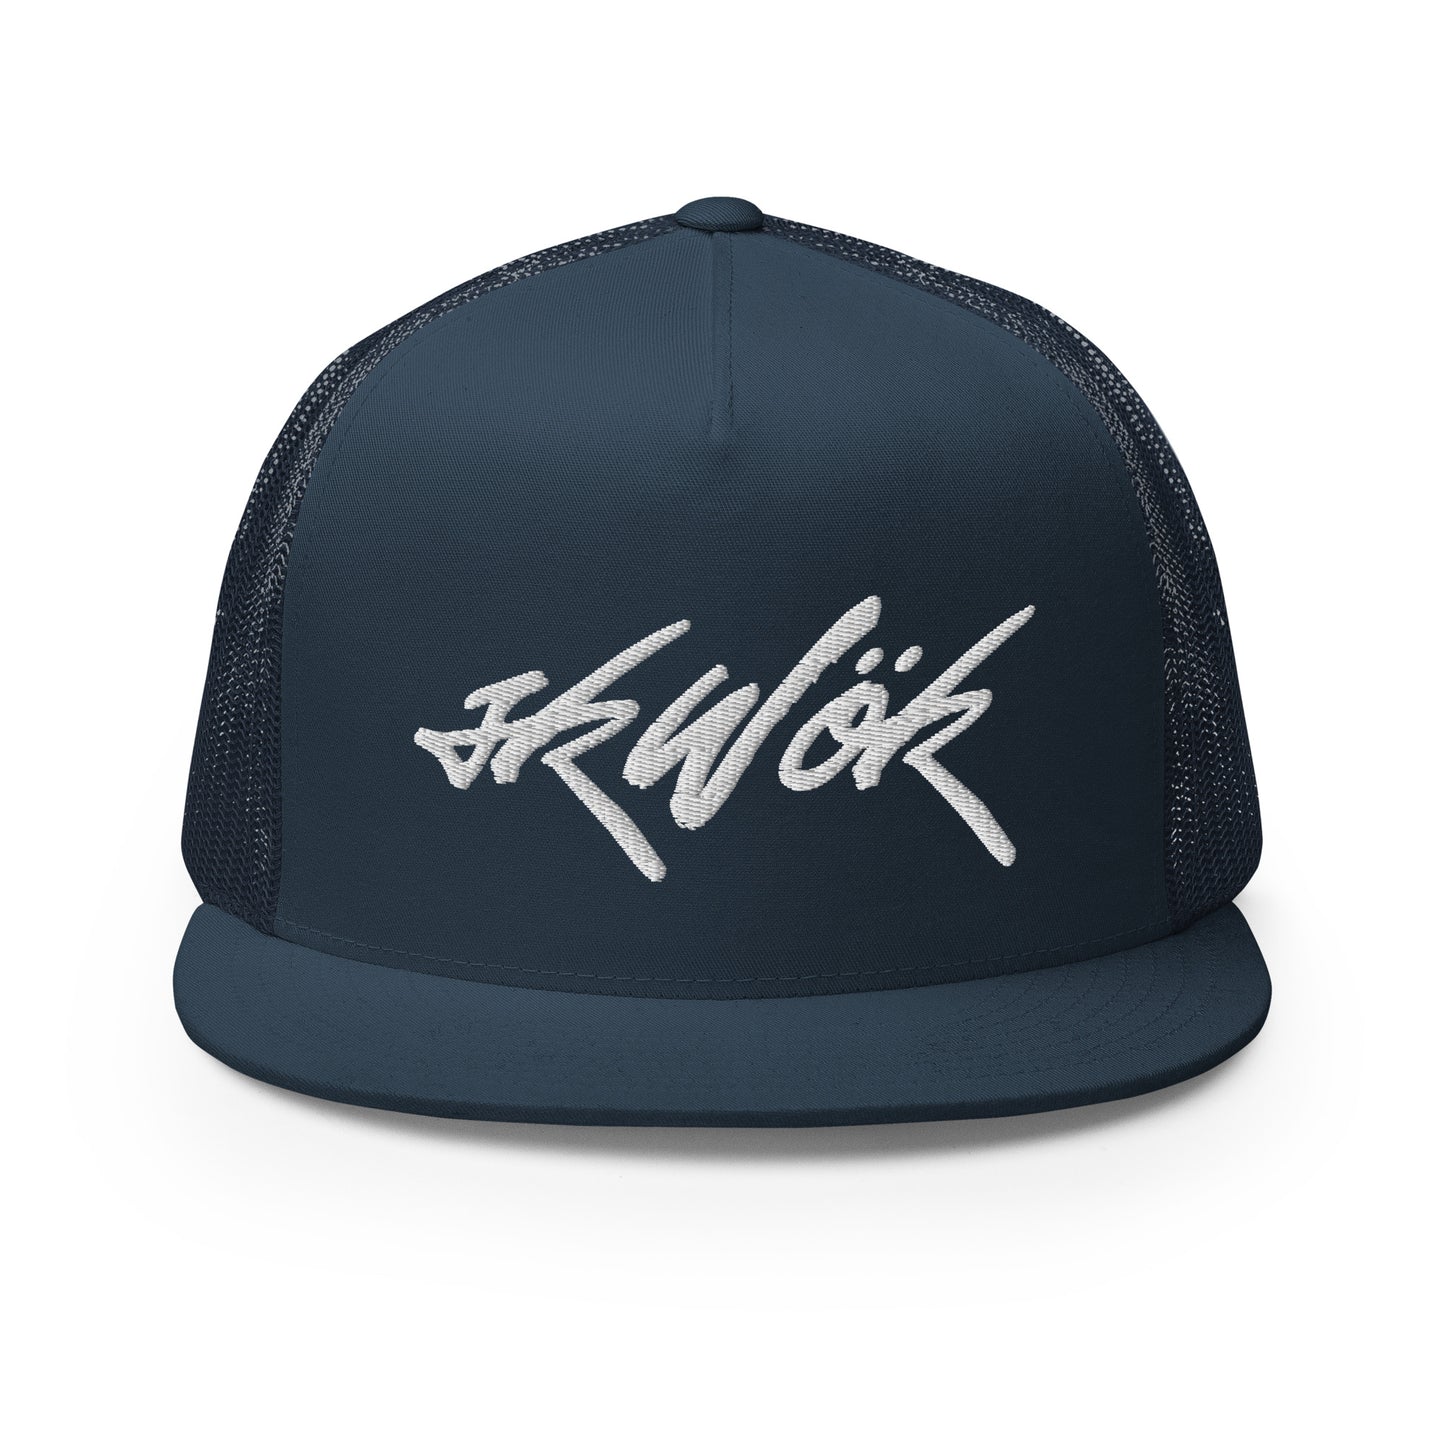 Skwok Brand / Hat / Trucker Cap / Tag Logo / 3d Puff / White